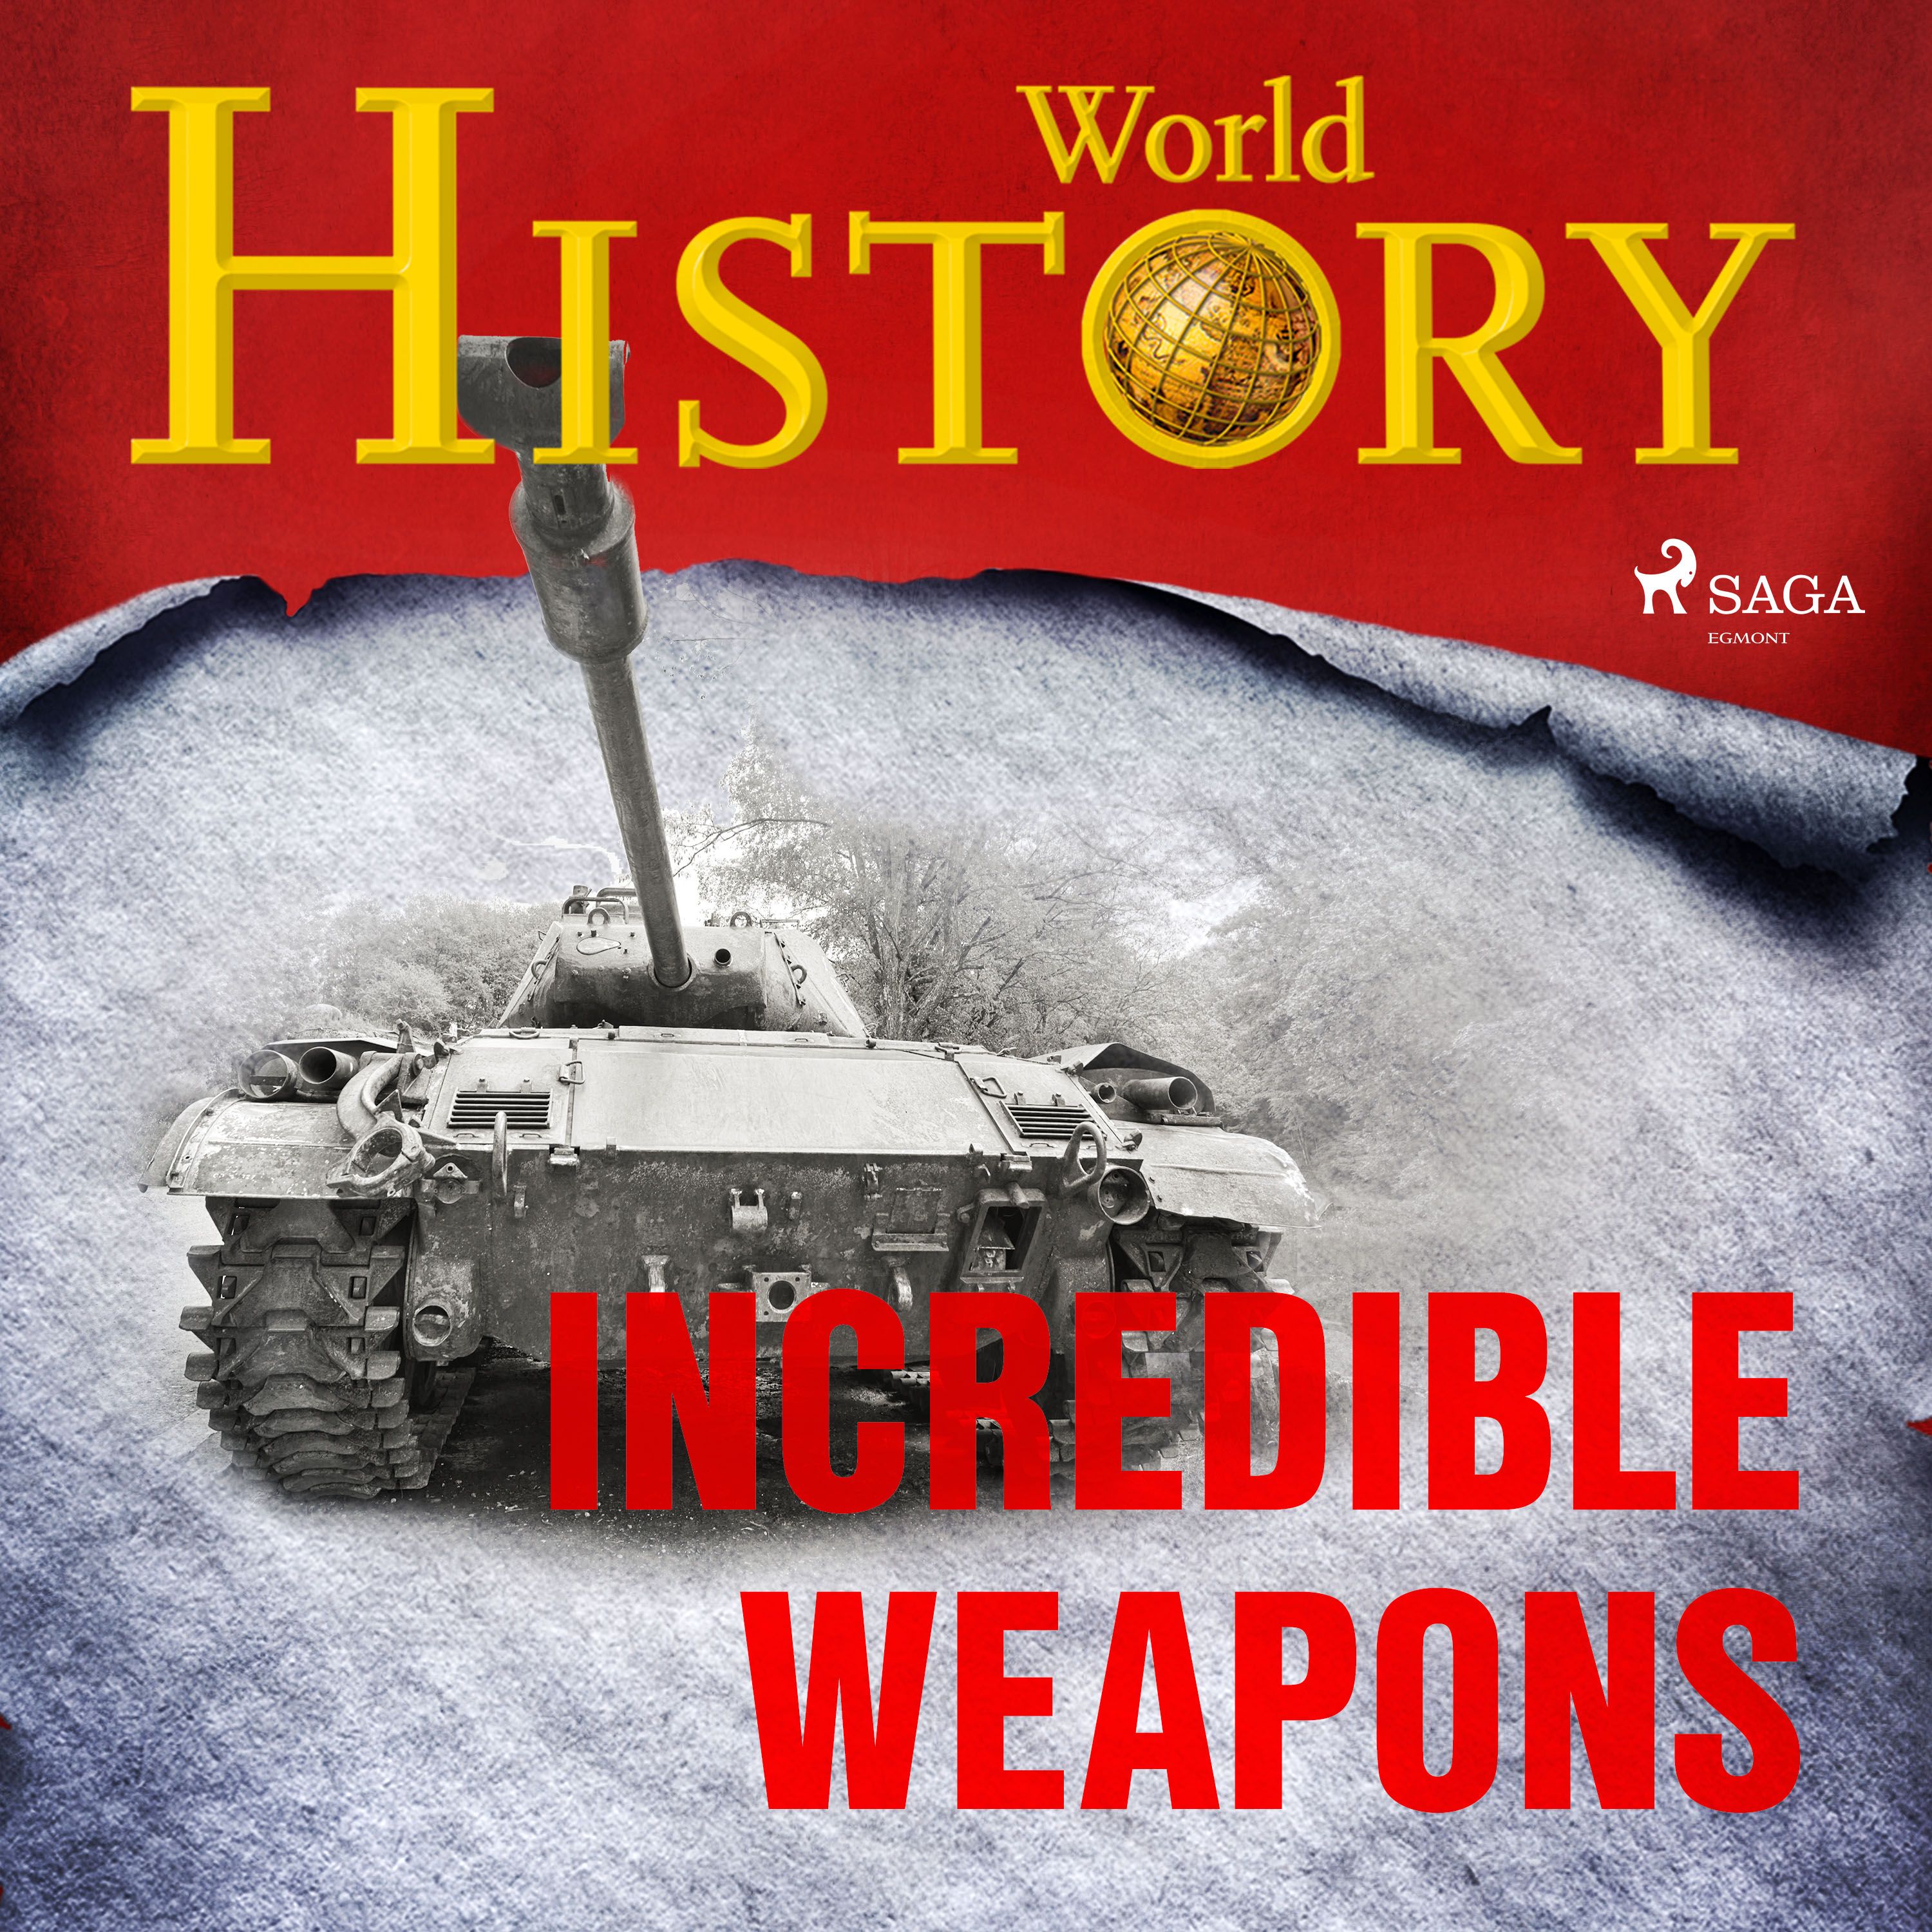 Incredible Weapons, ljudbok av World History